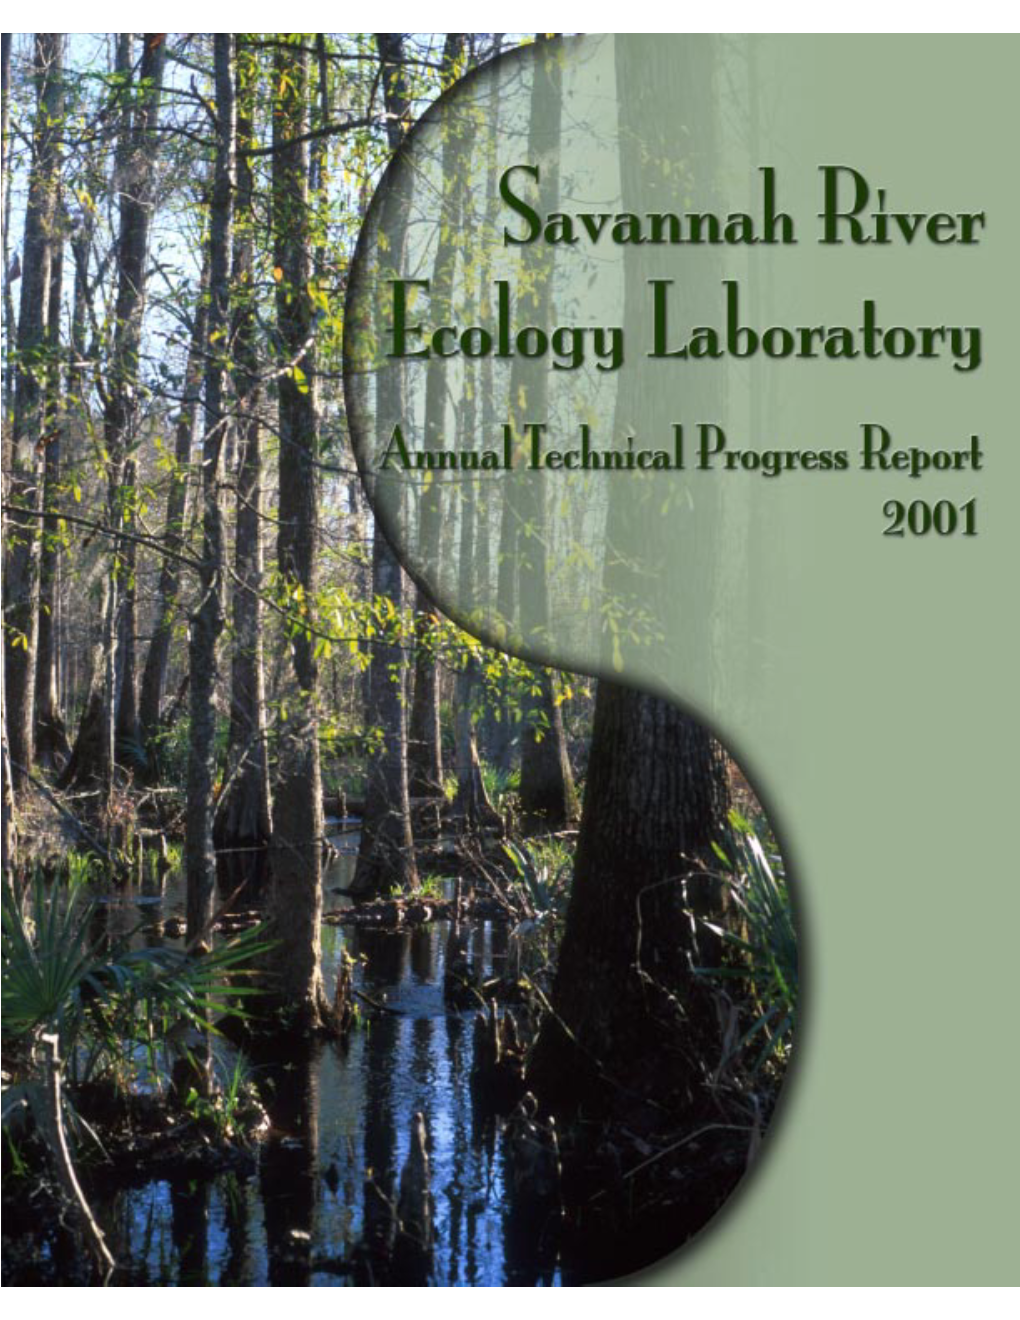 Savannah River Ecology Laboratory Annual Technical Progress